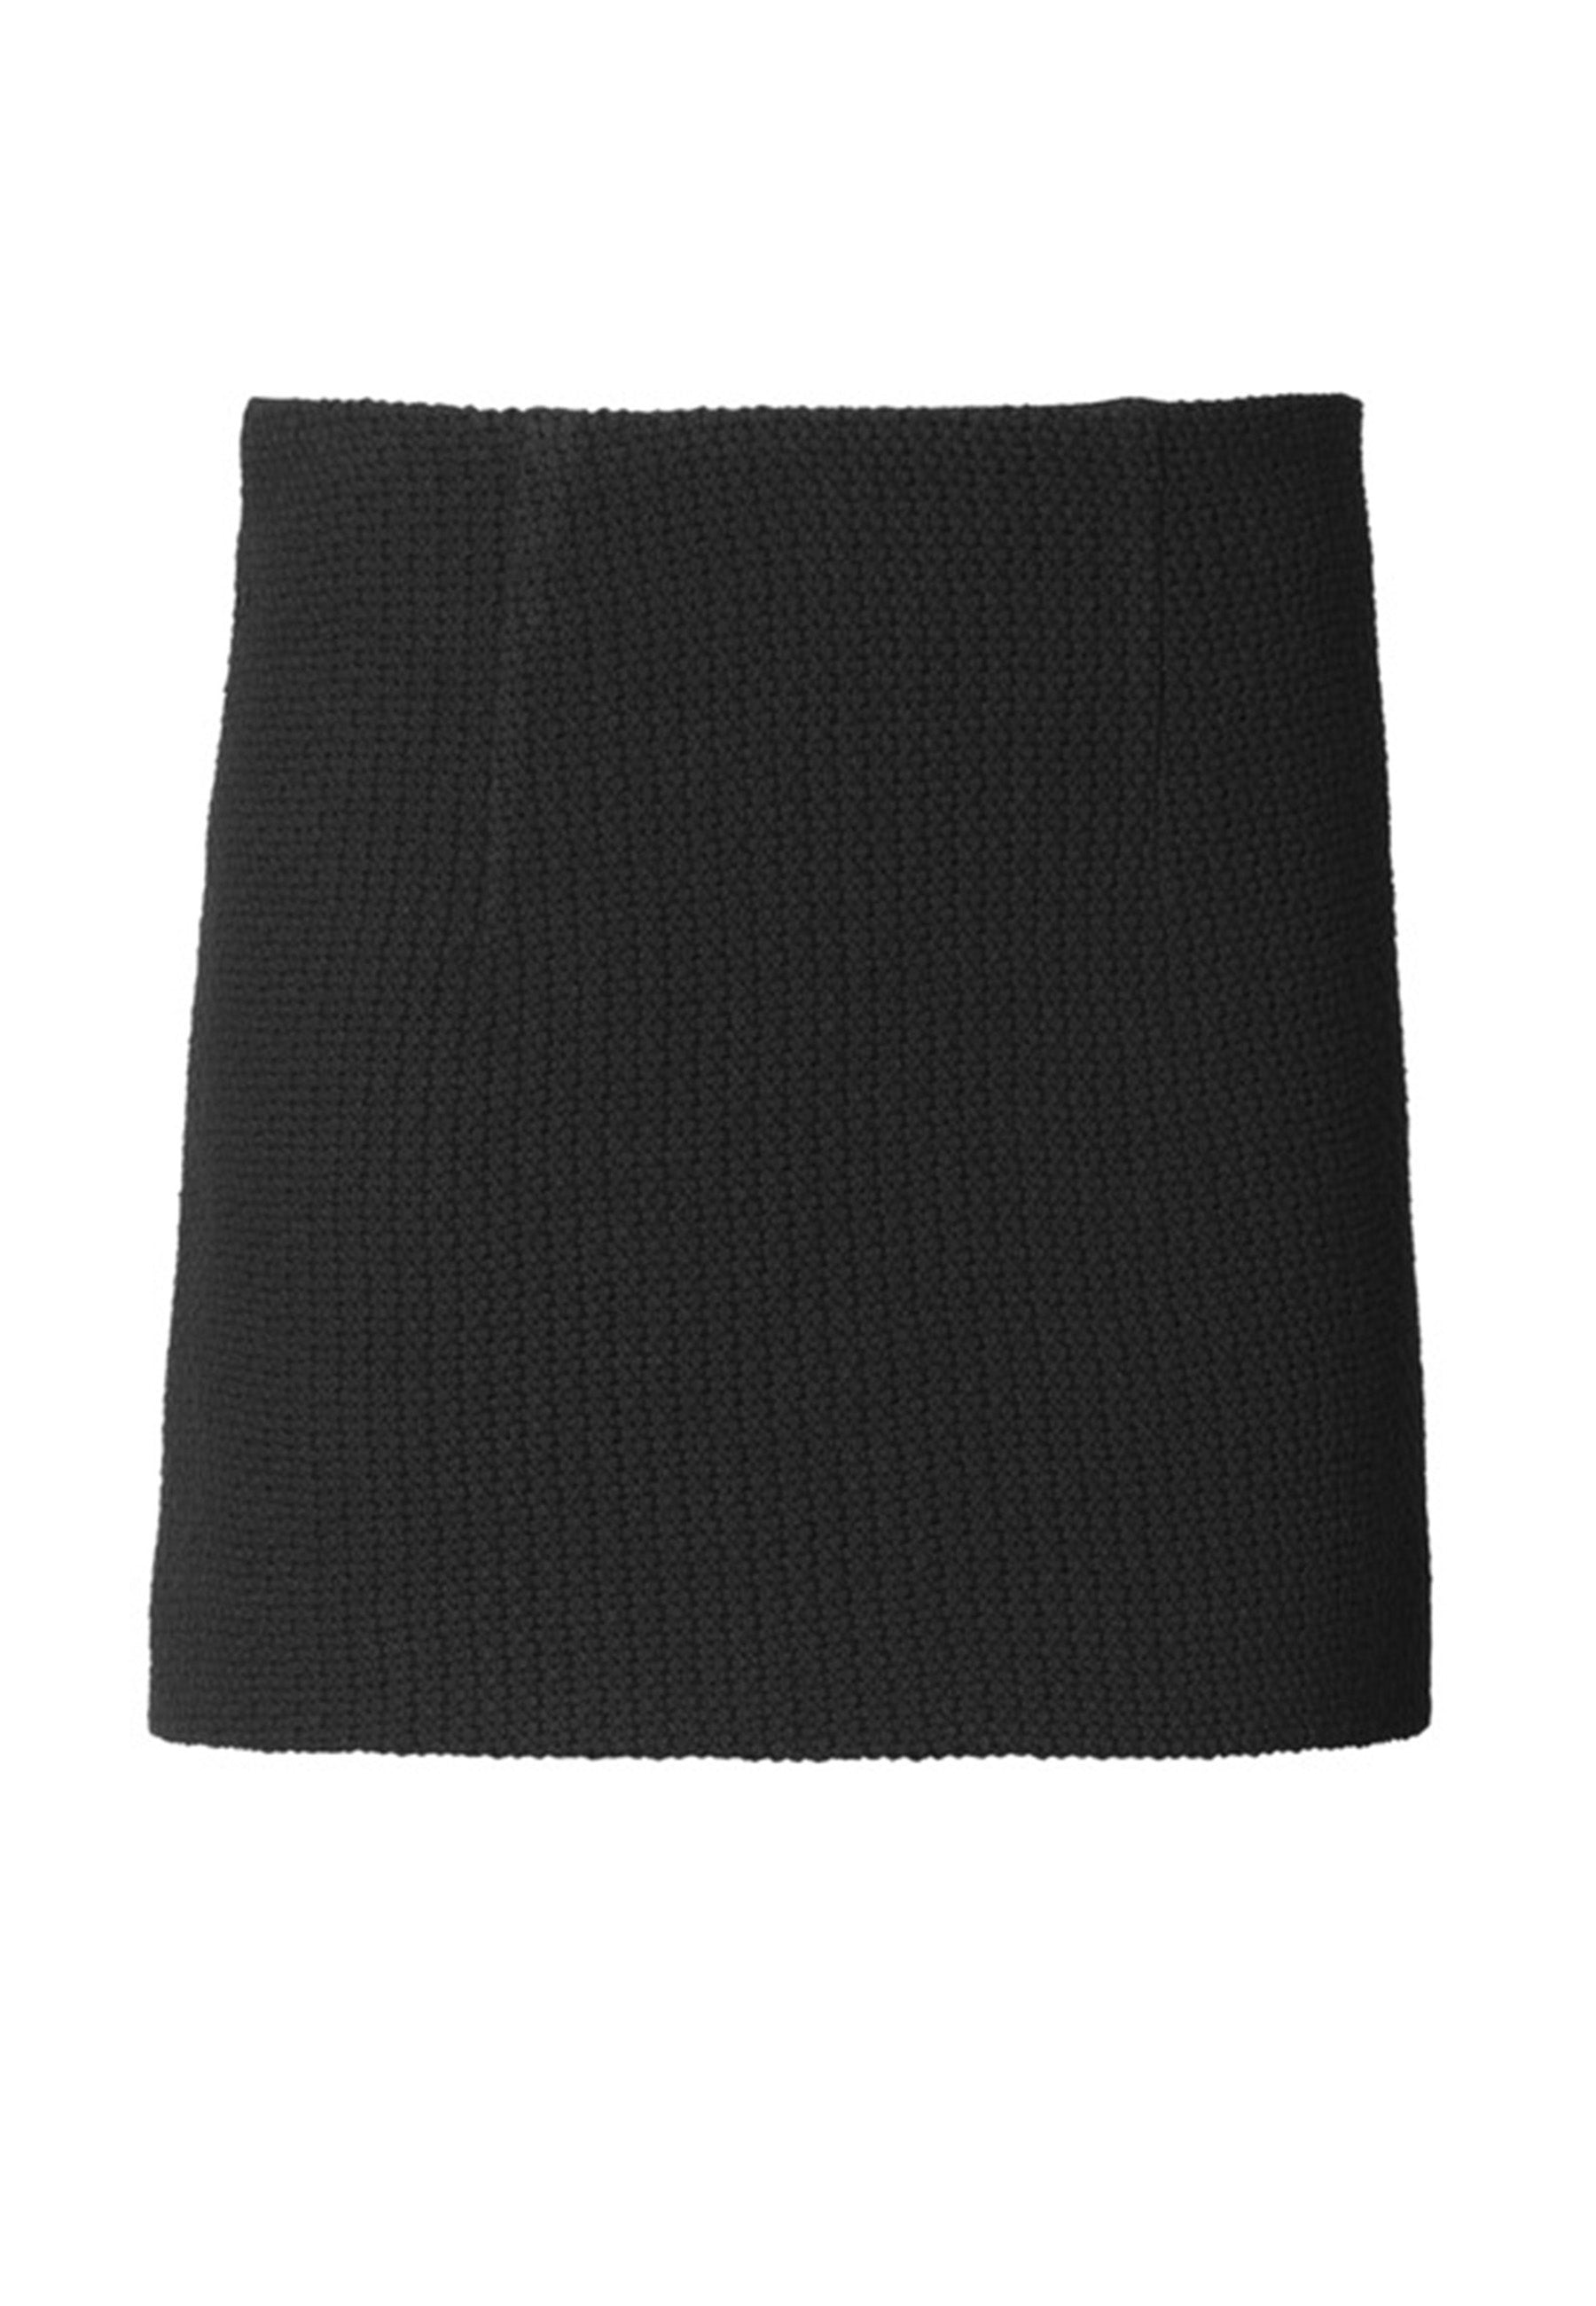 Women's black cotton mini skirt with slit